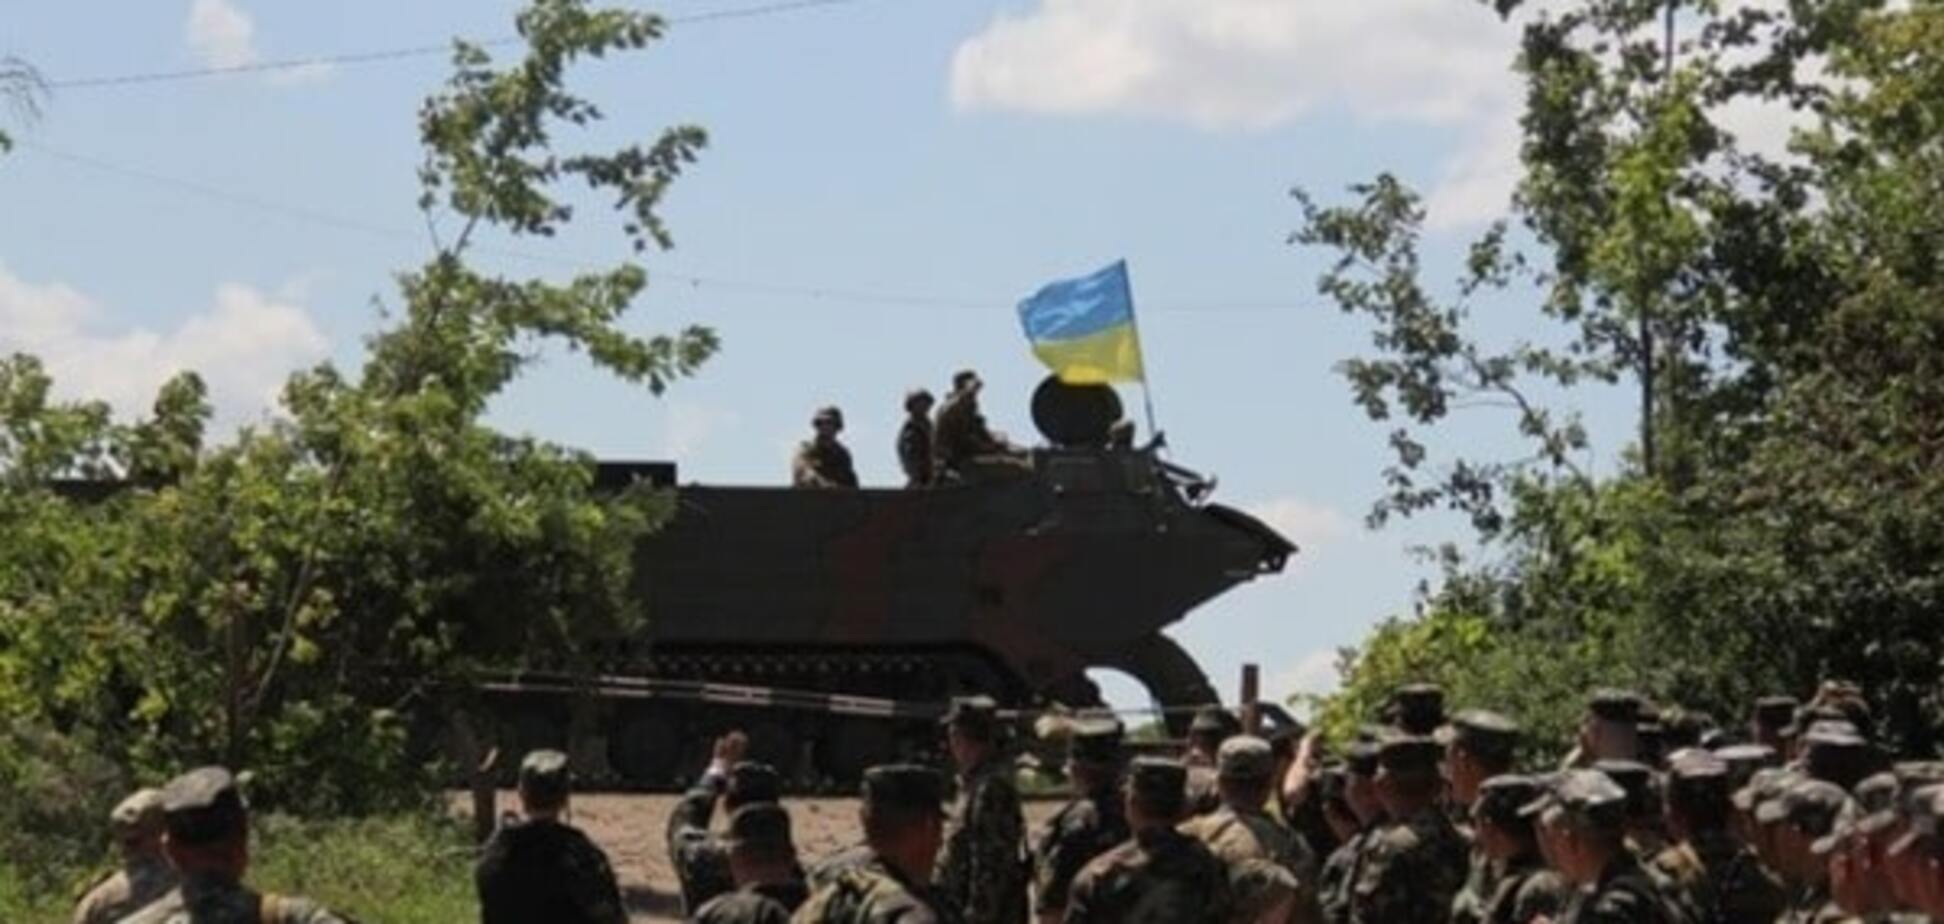 Отвод вооружений на Донбассе